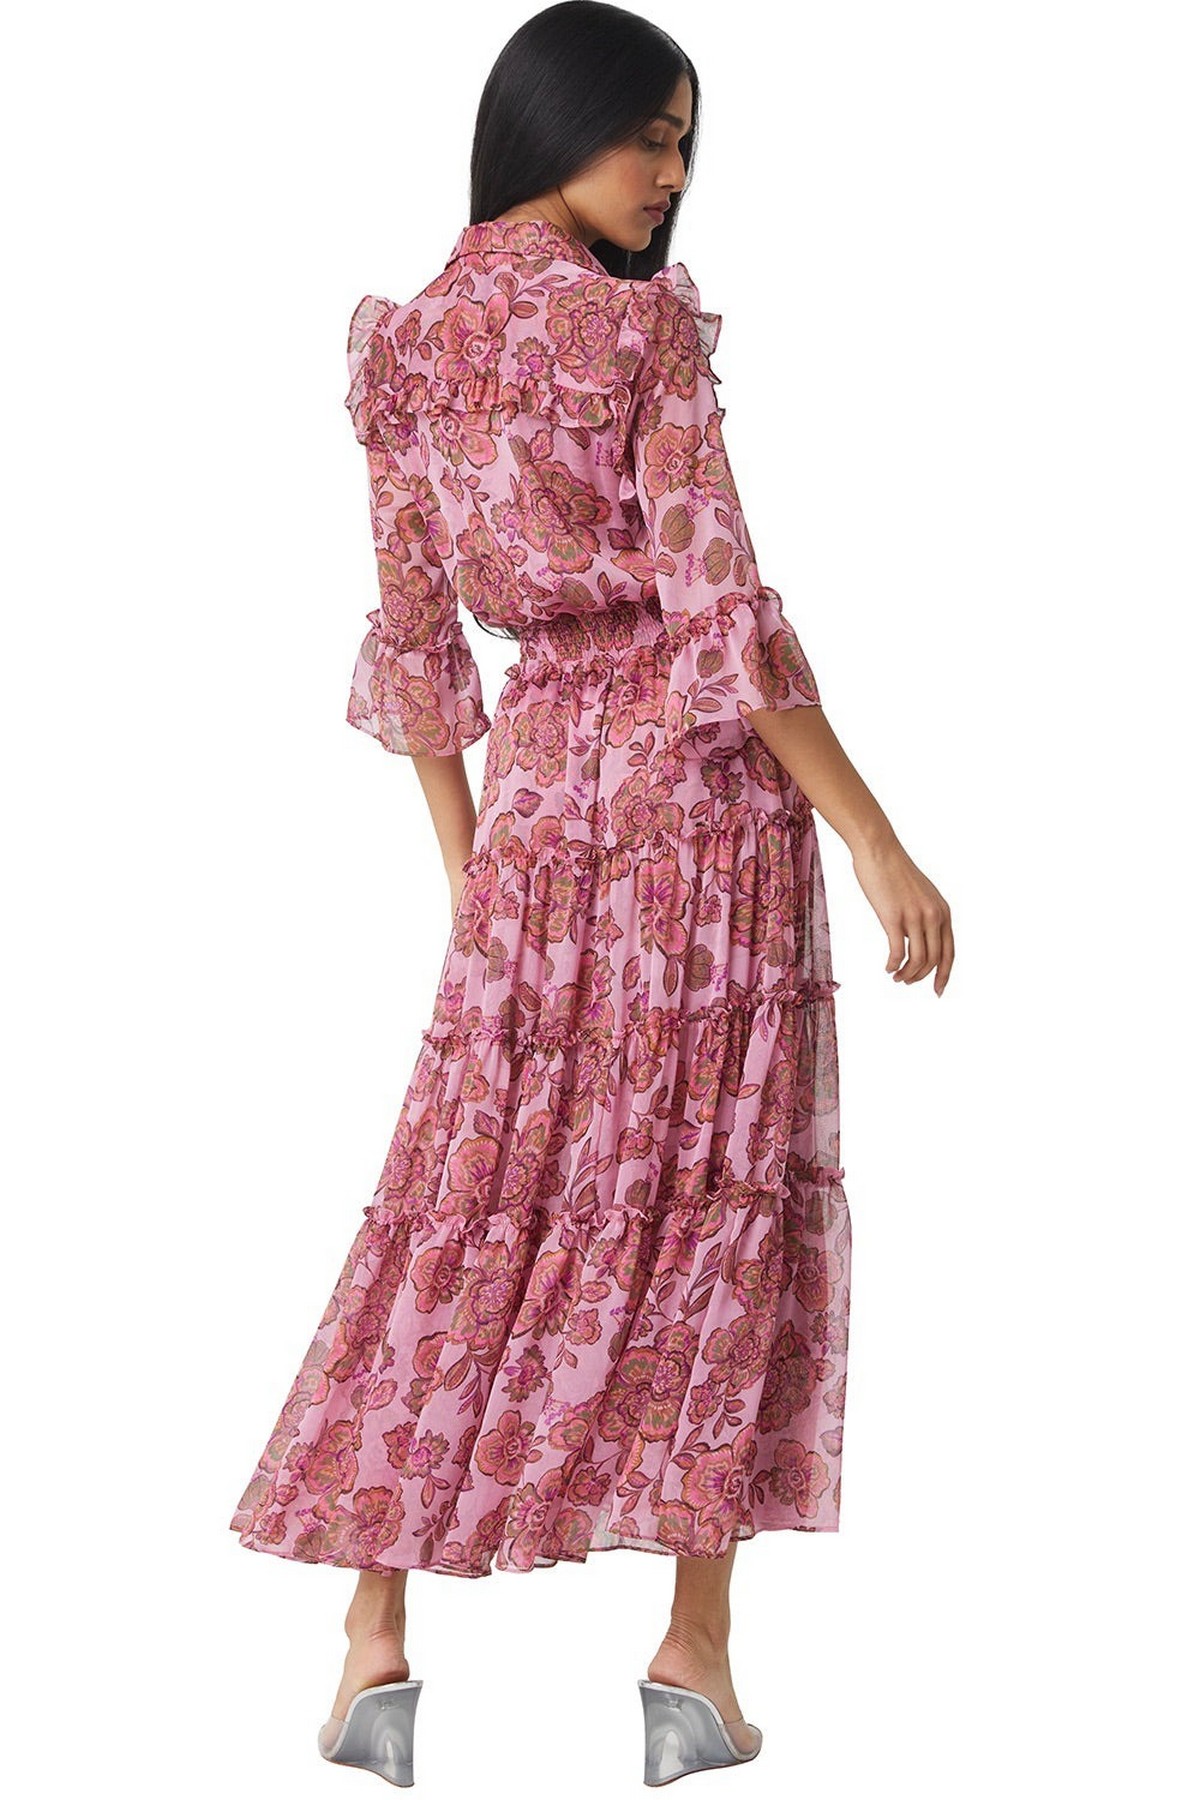 Misa - Pamelina Dress - Kleed lang bloem chiffon zijde roze groen